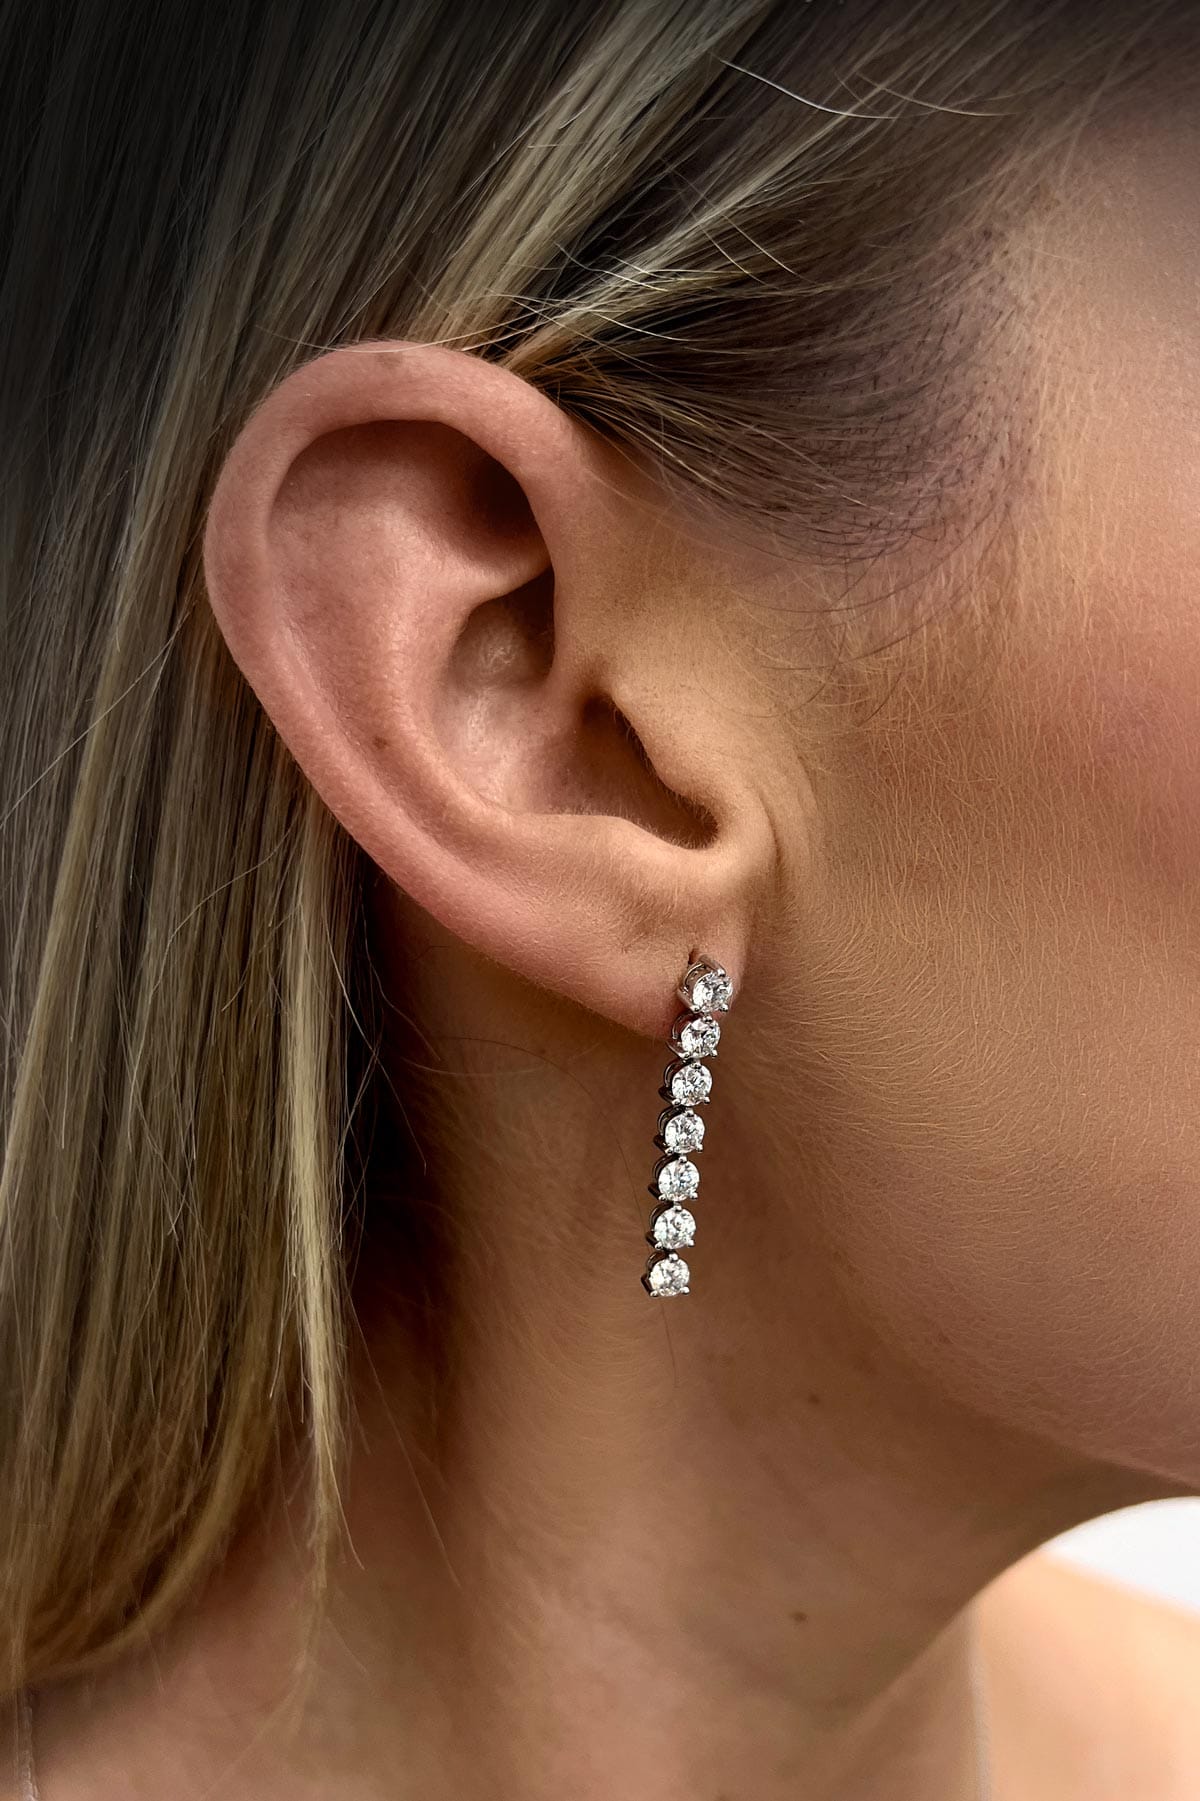 Diamond earrings available at LeGassick Diamonds and Jewellery Gold Coast, Australia.